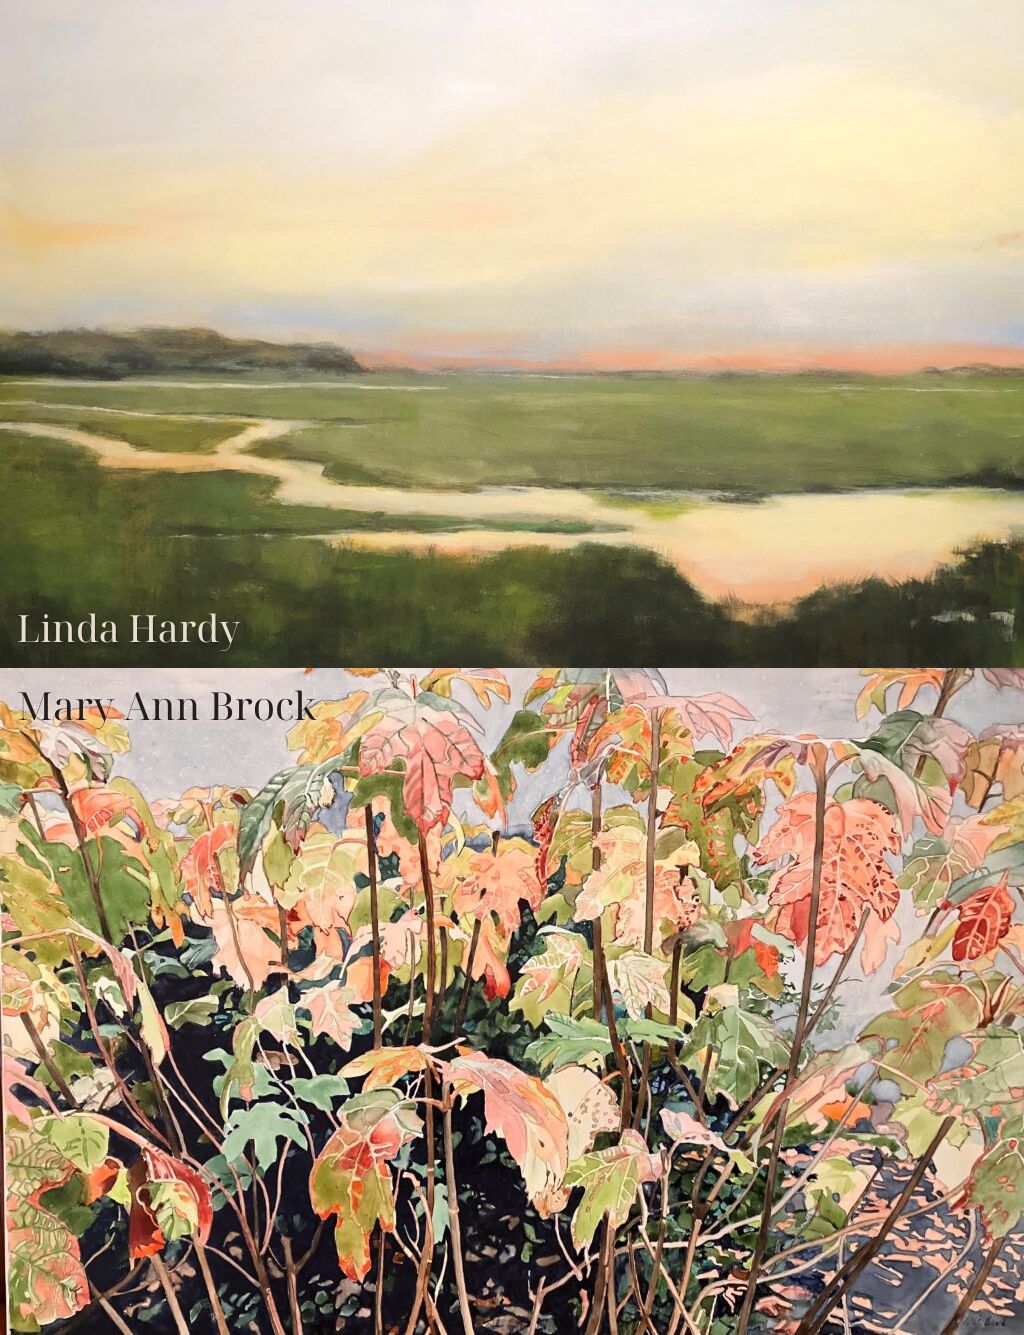 art work by Linda Hardy (top) and Mary Ann Brock (bottom)